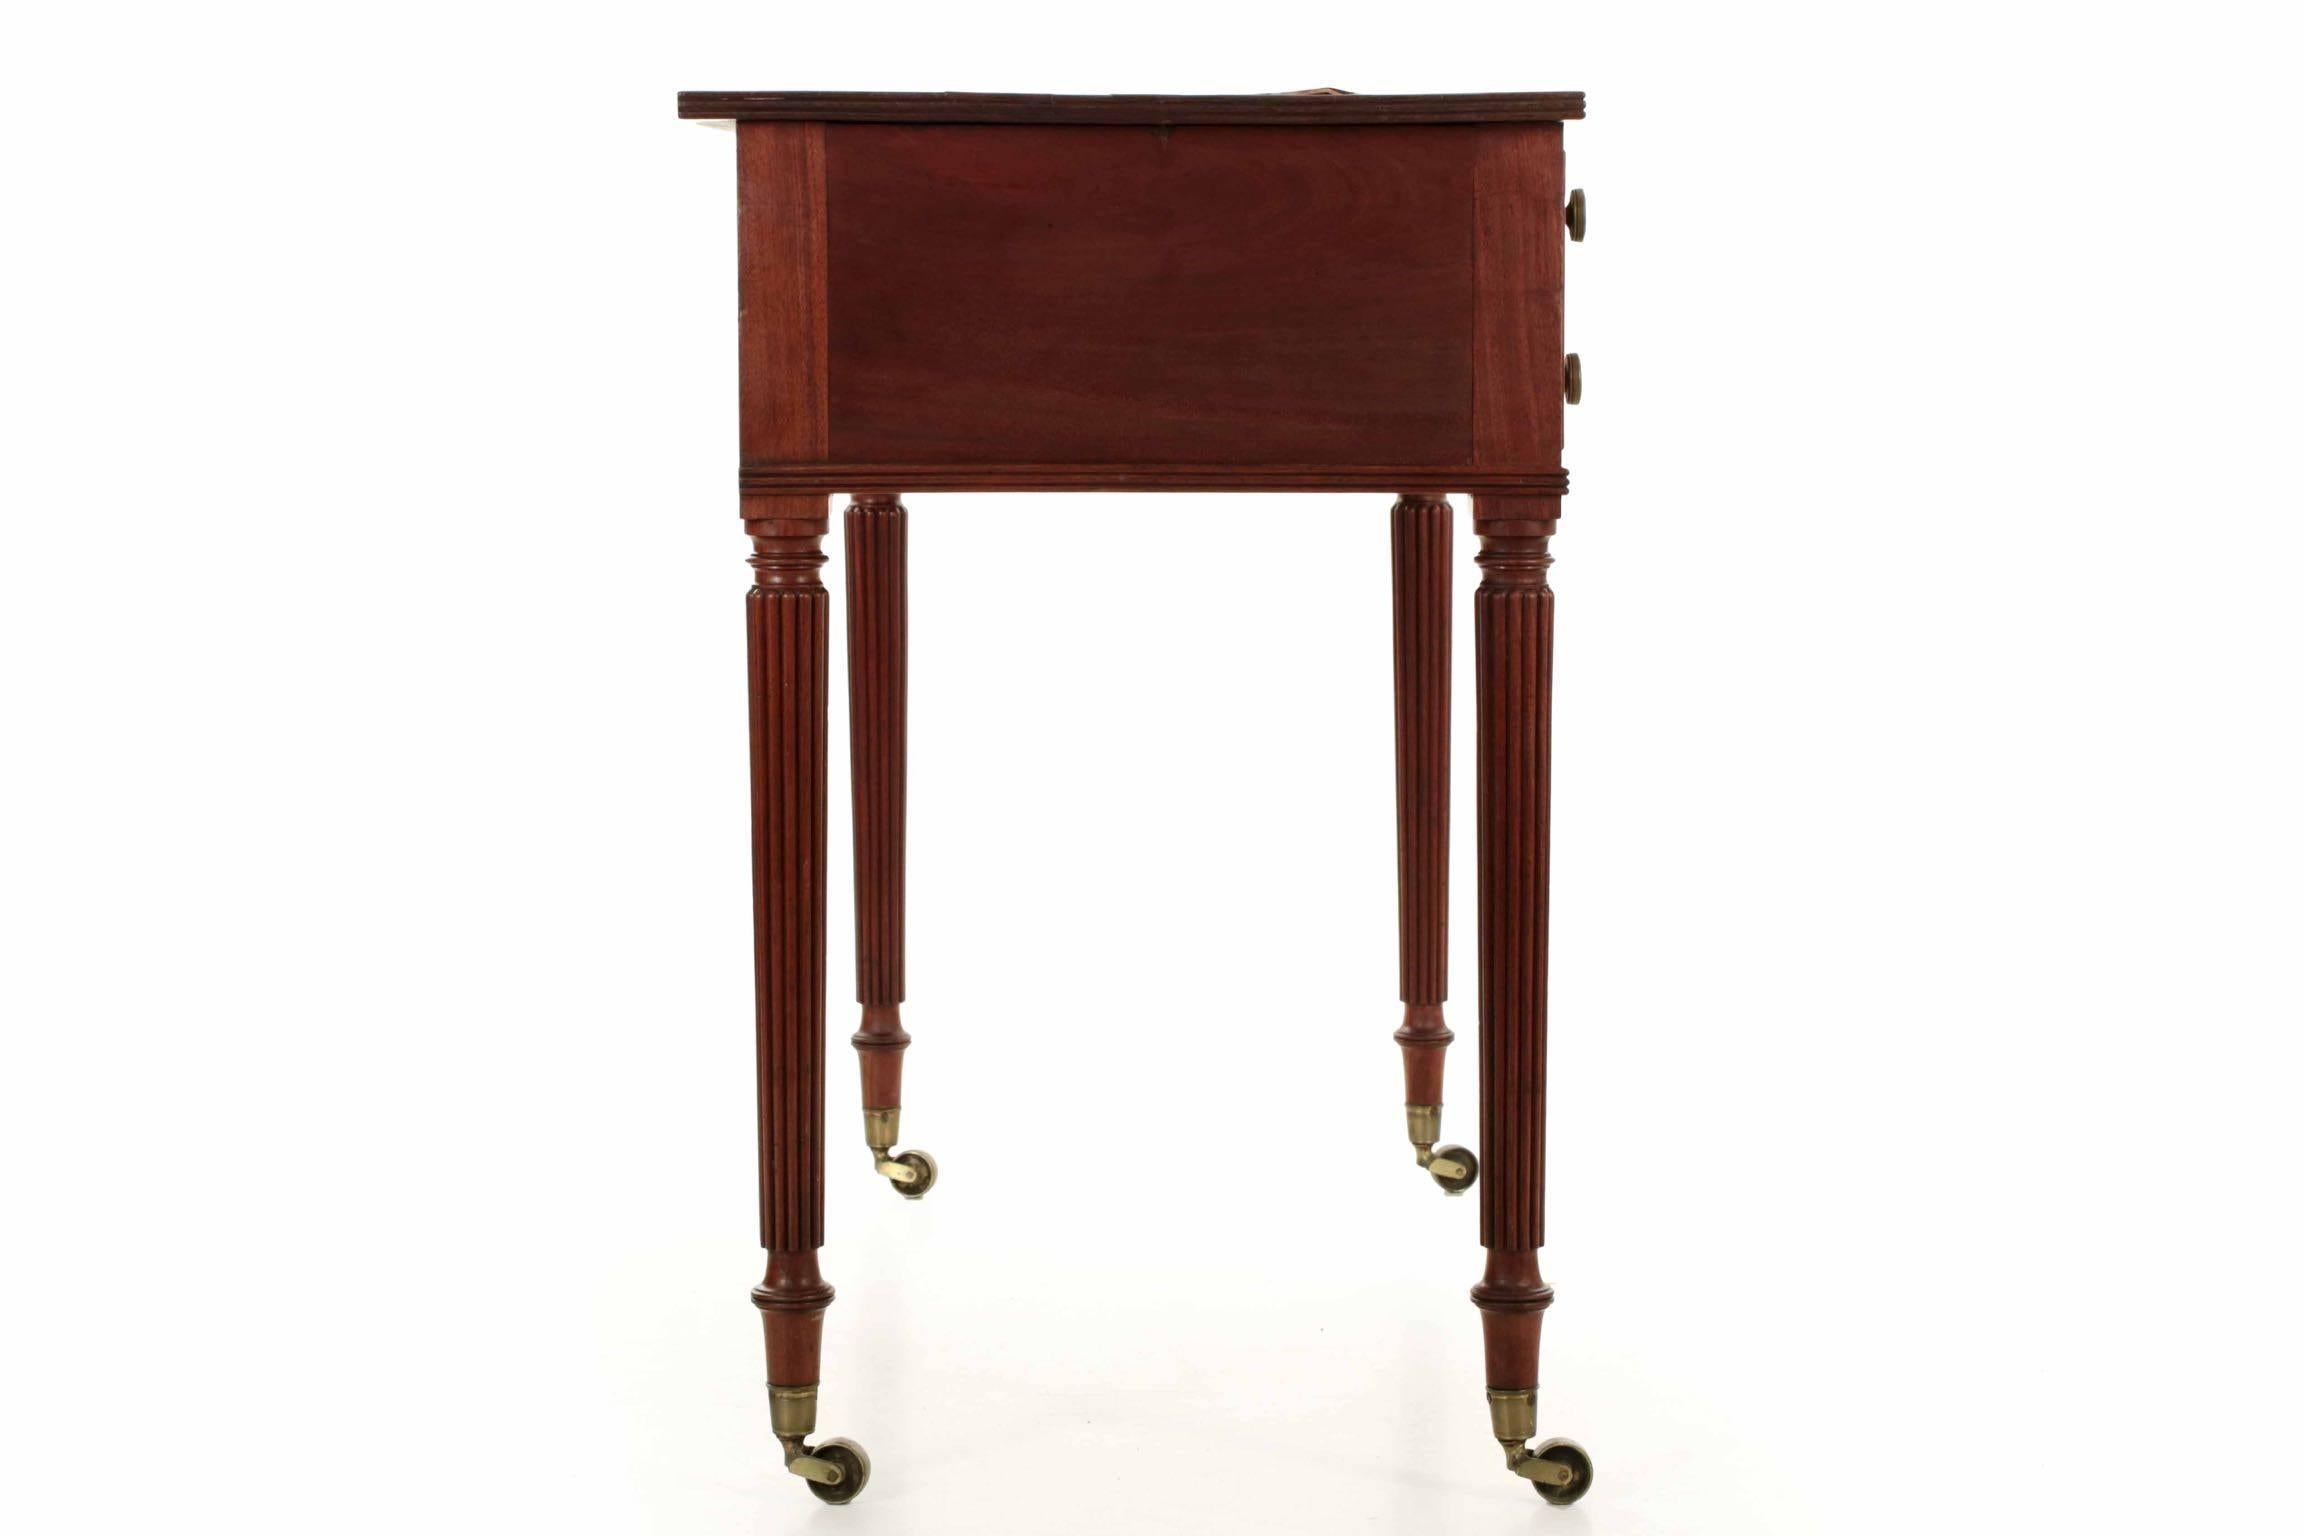 English Regency Period Mahogany & Leather Antique Writing Desk Table c. 1815-30 2